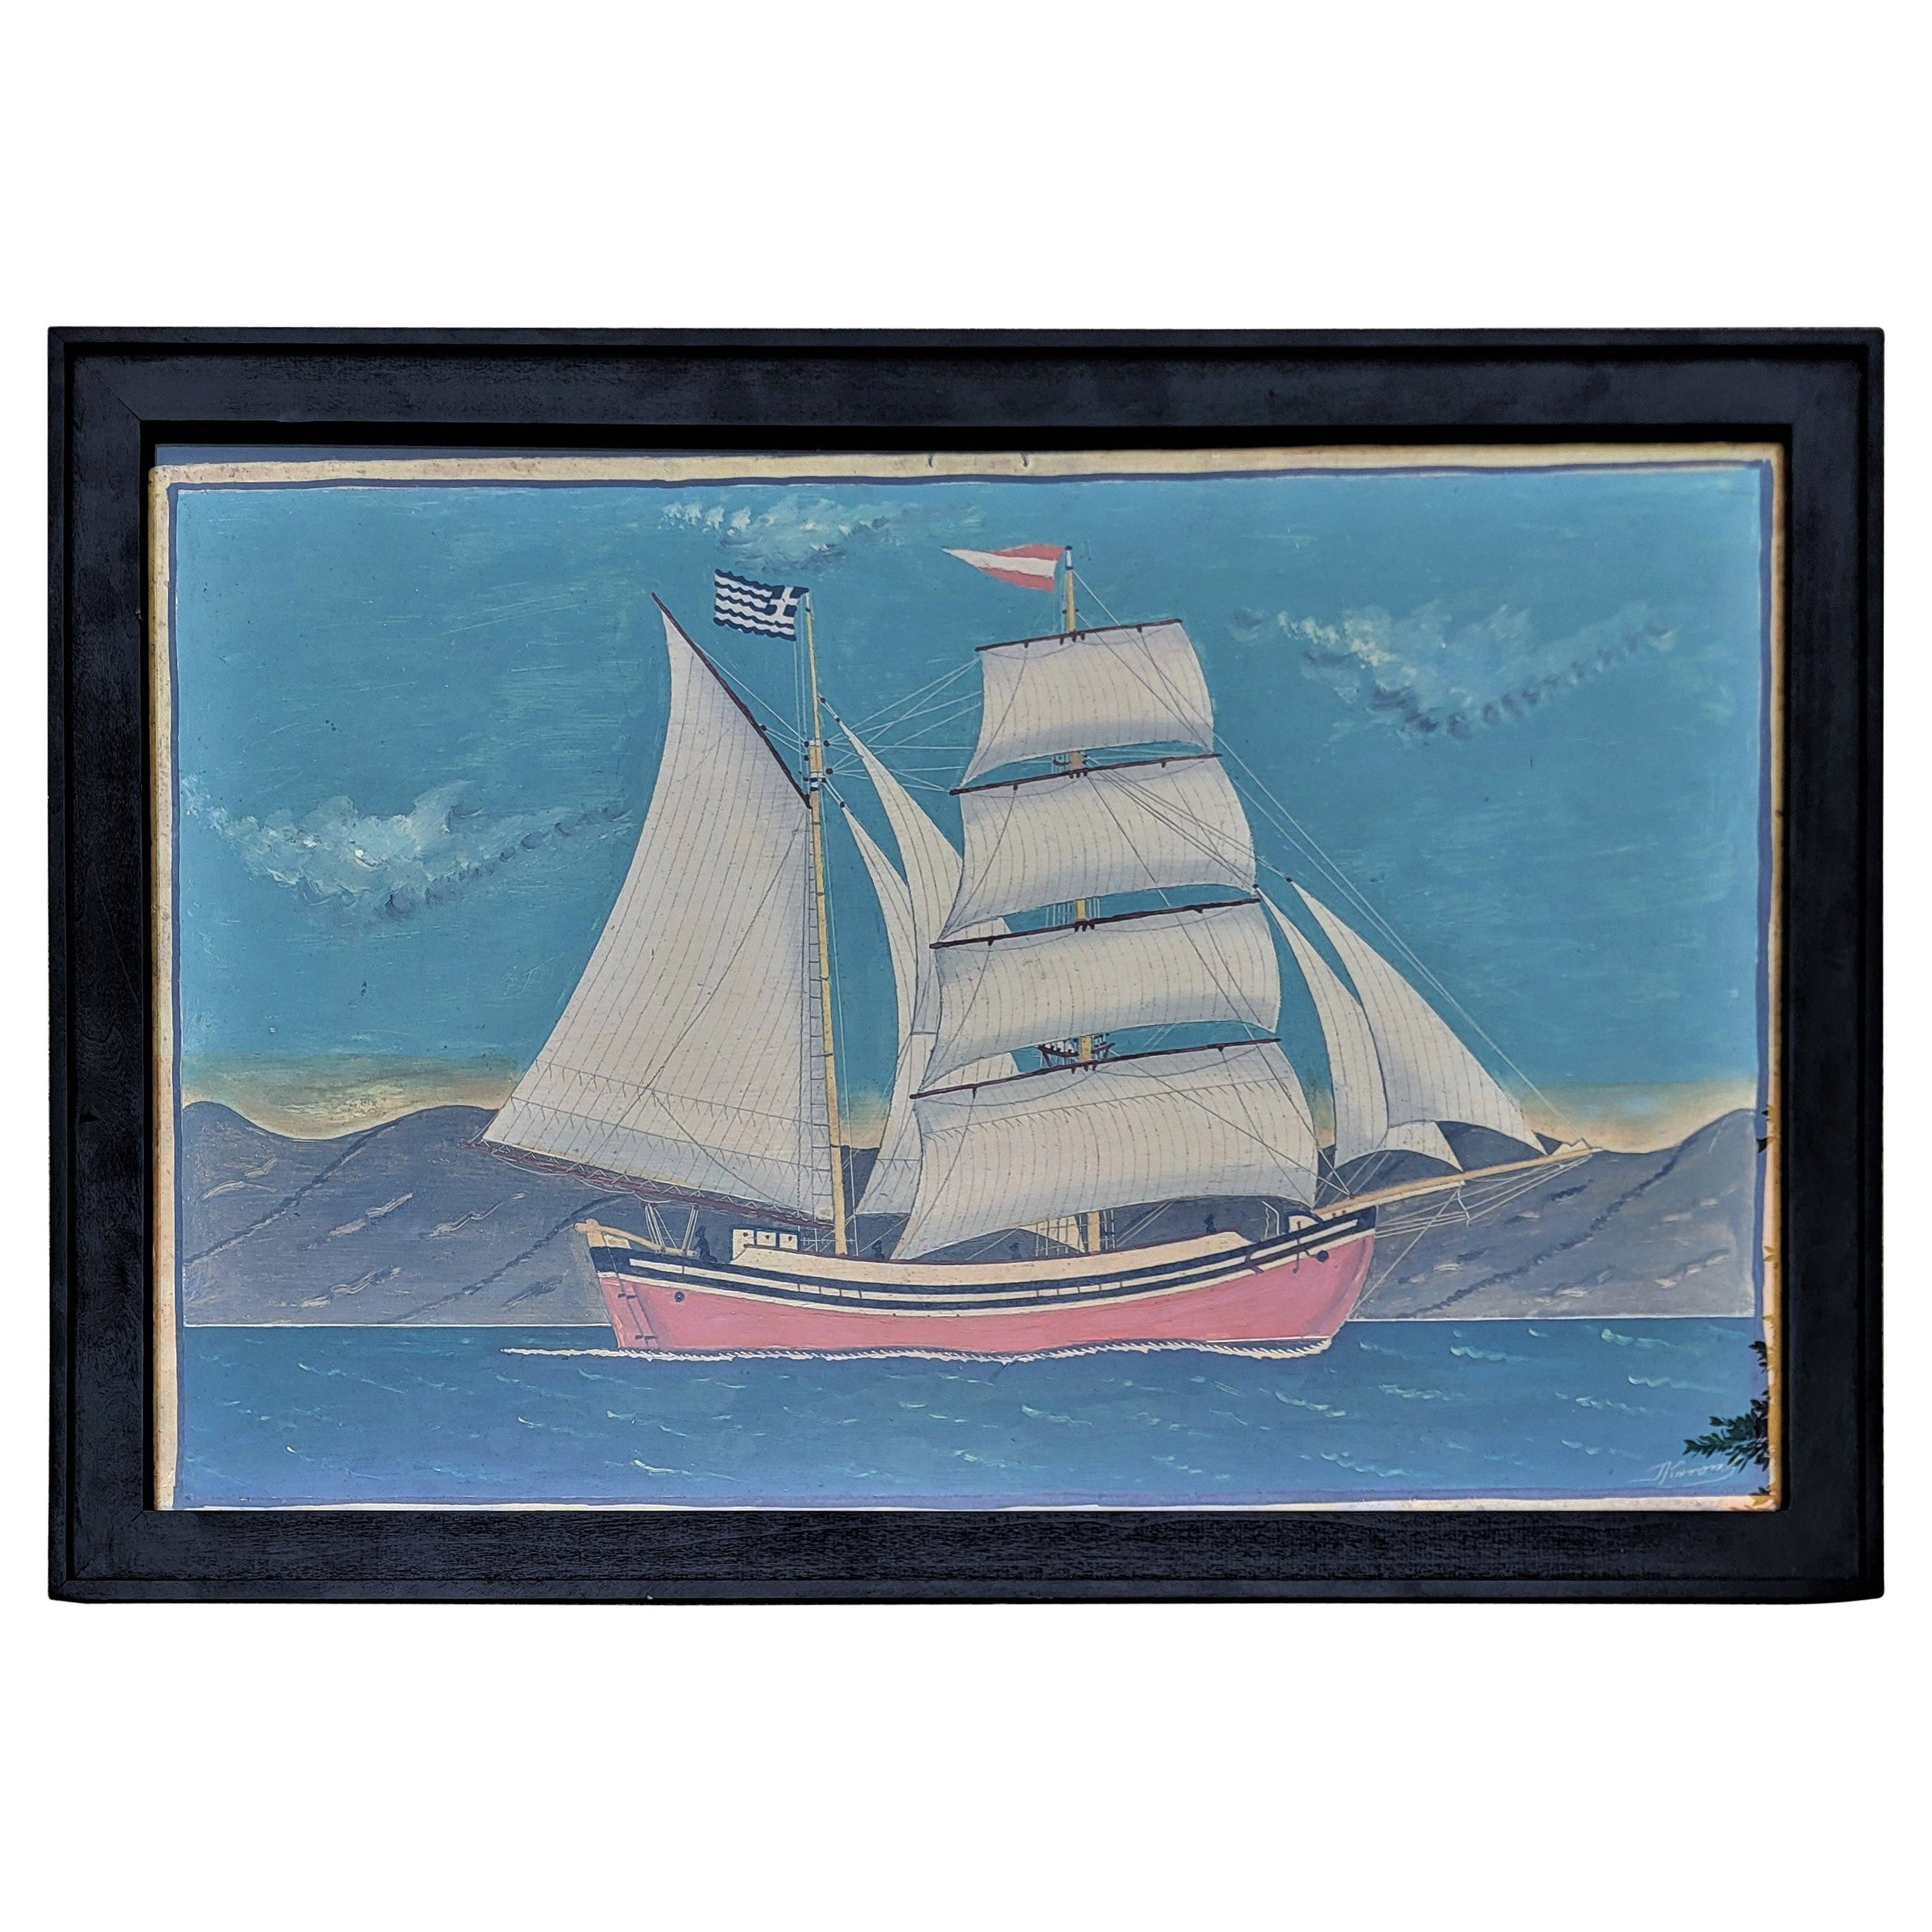 Signed Schooner Ship Oil Painting By J.Koitor For Sale